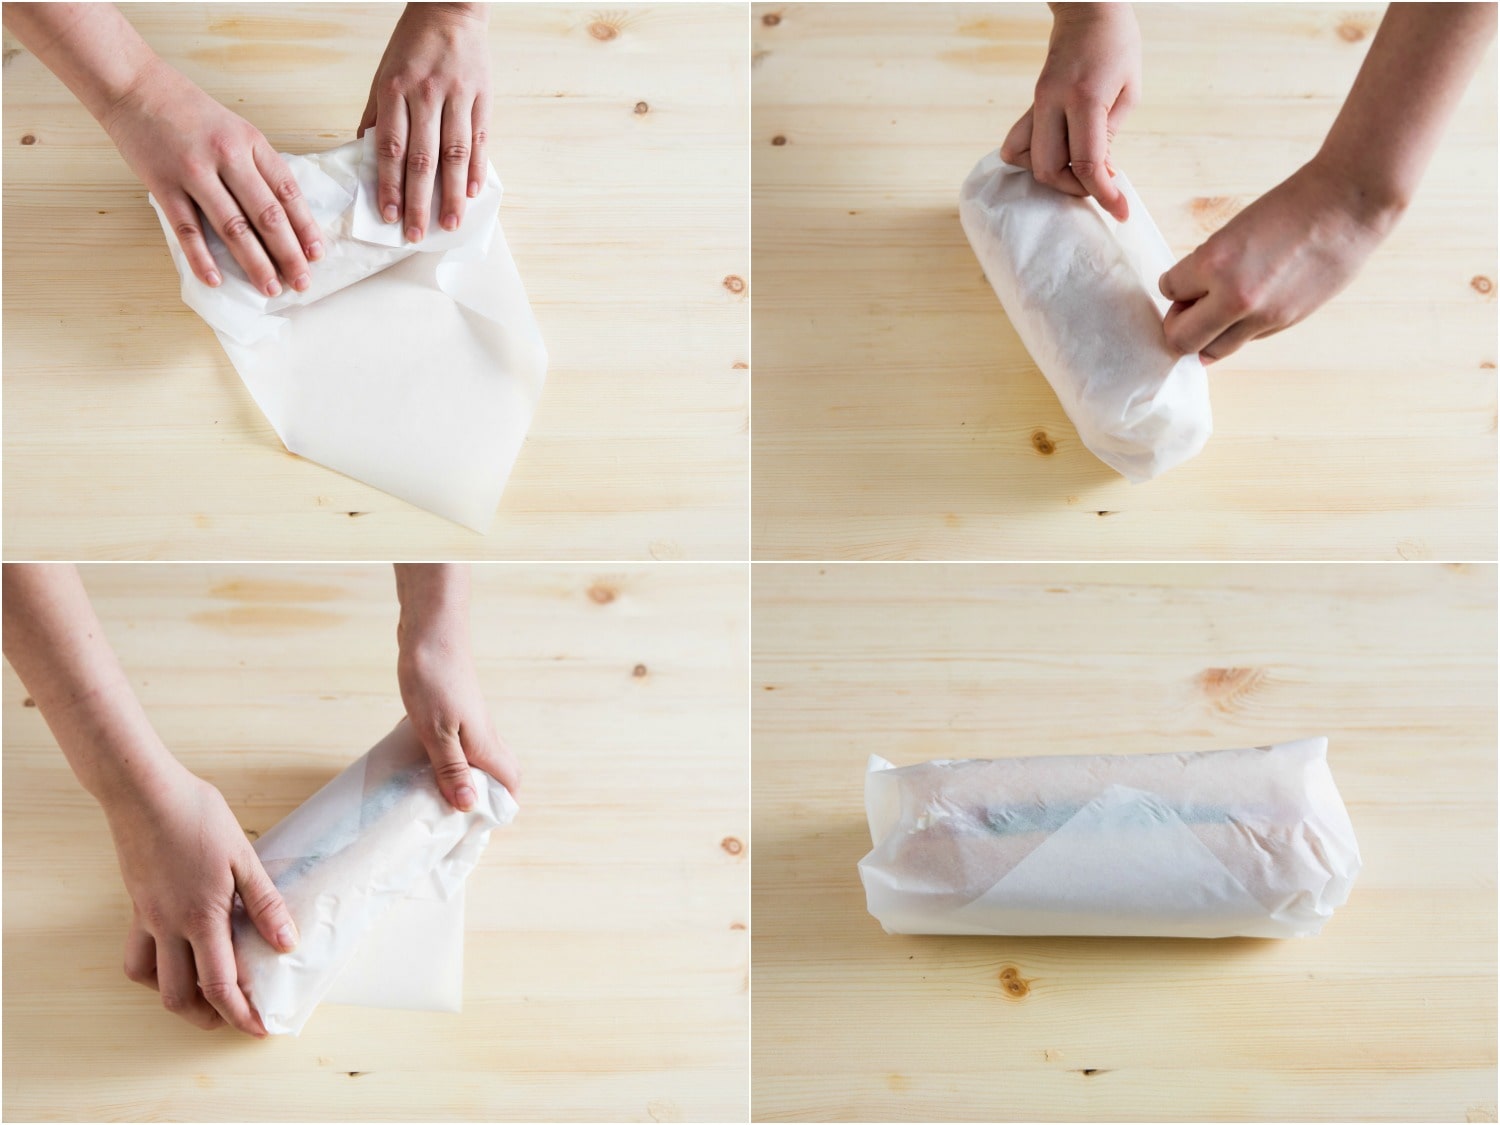 آموزش پیچیدن کاغذ ساندویچ